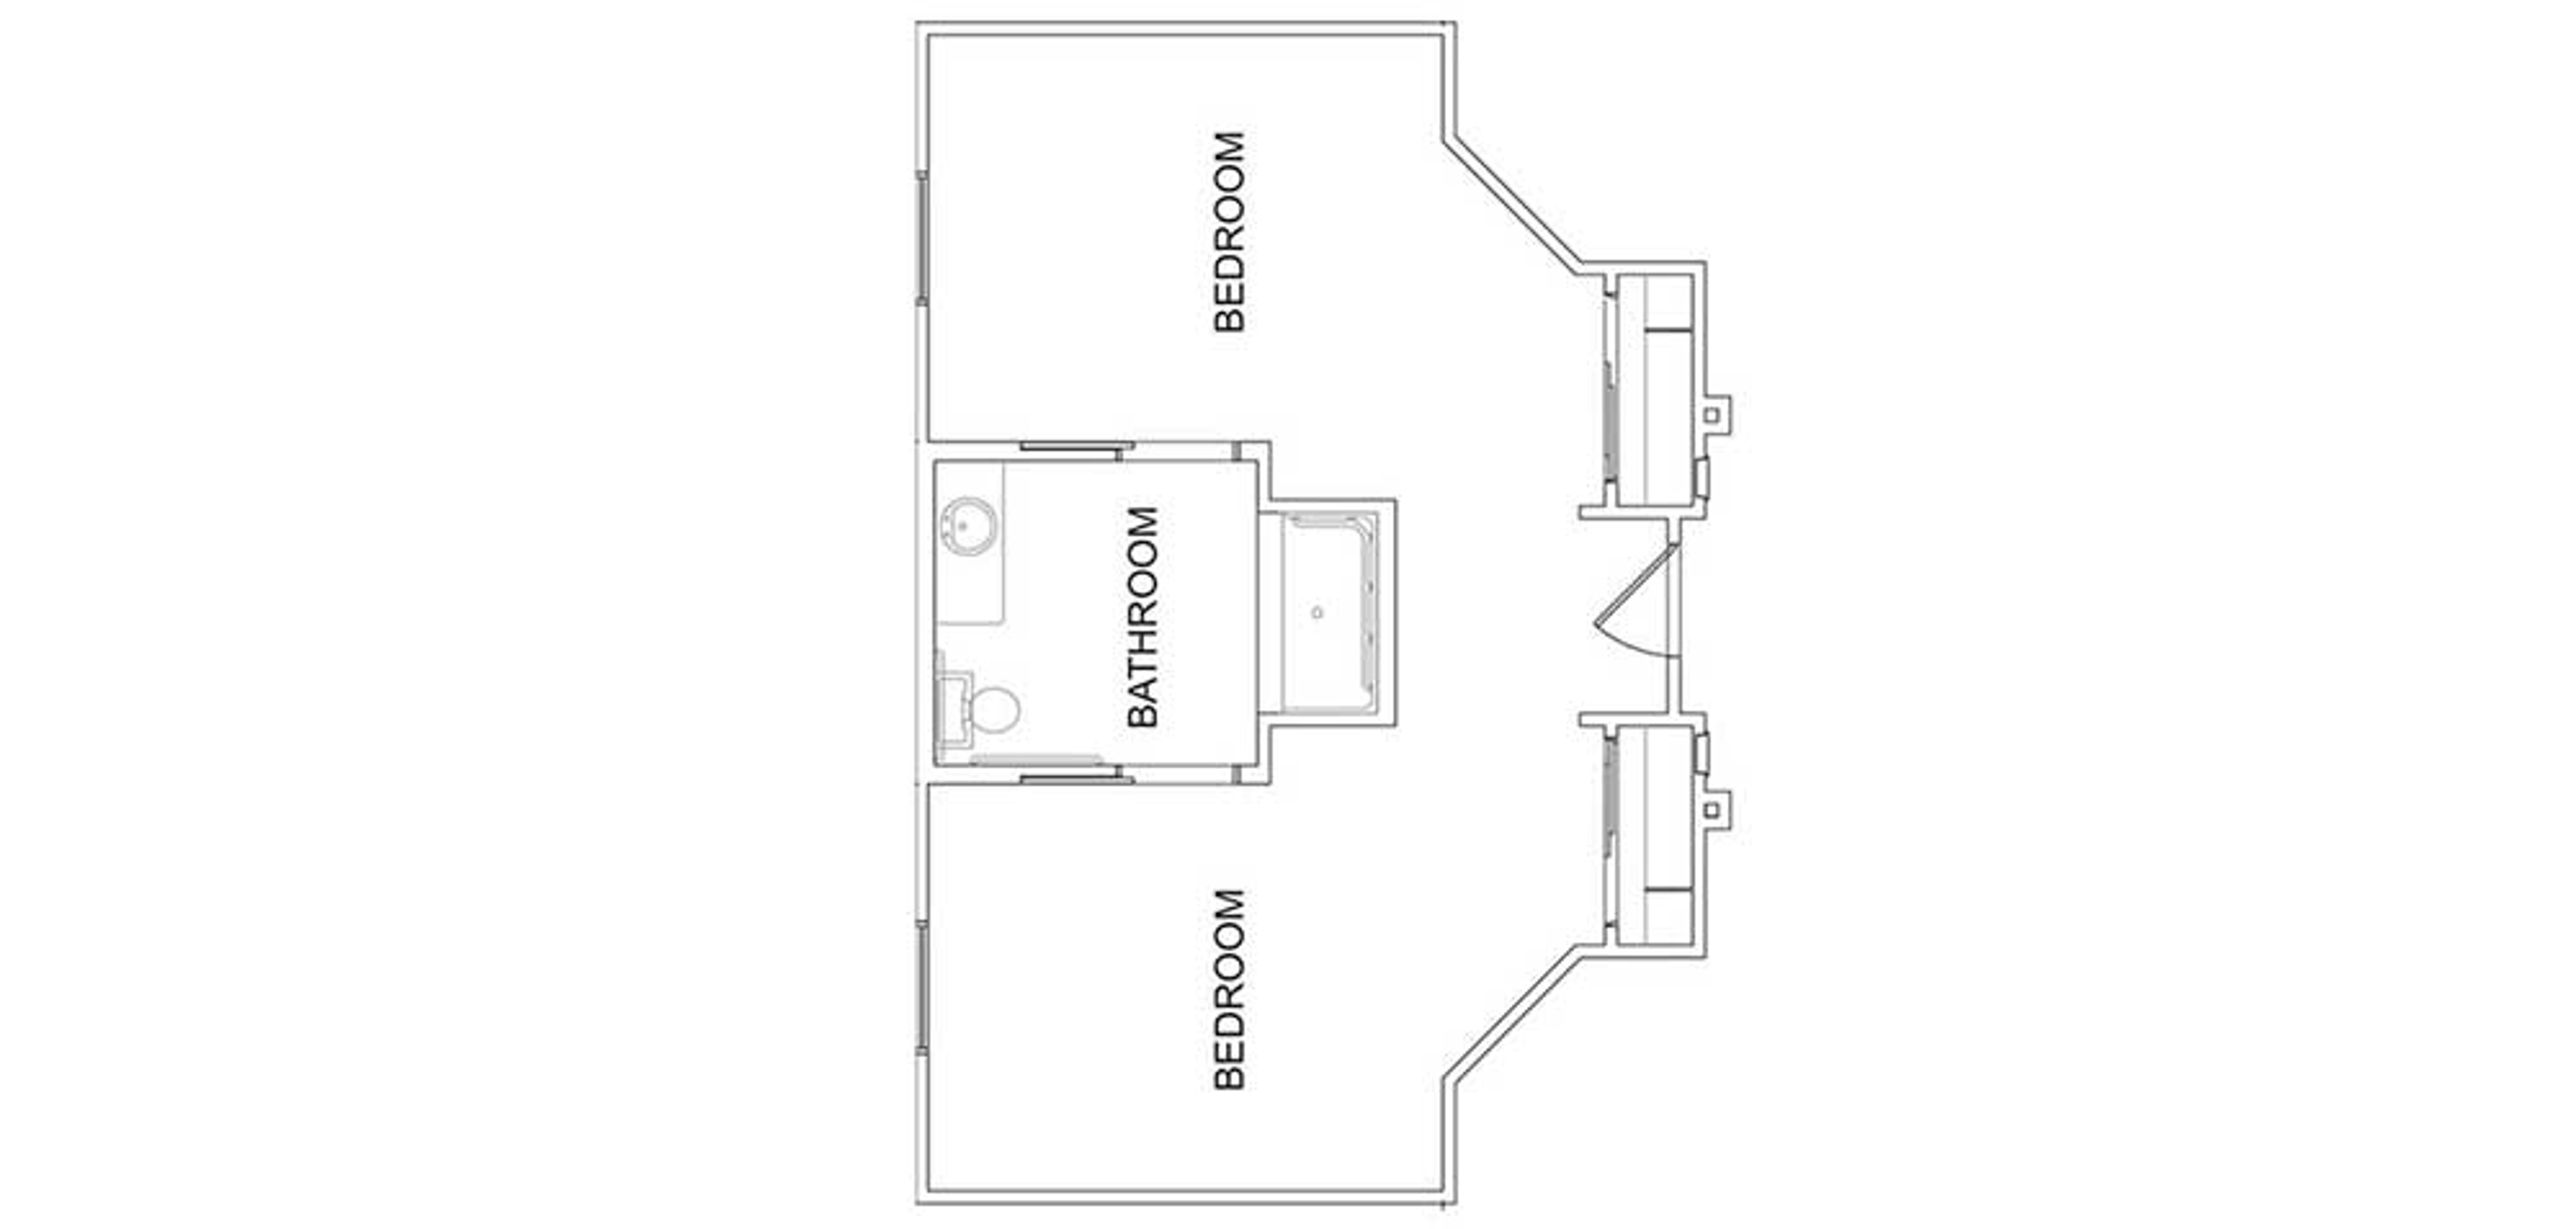 Floorplan - Pecan Pointe - 2B 1B Semi-private